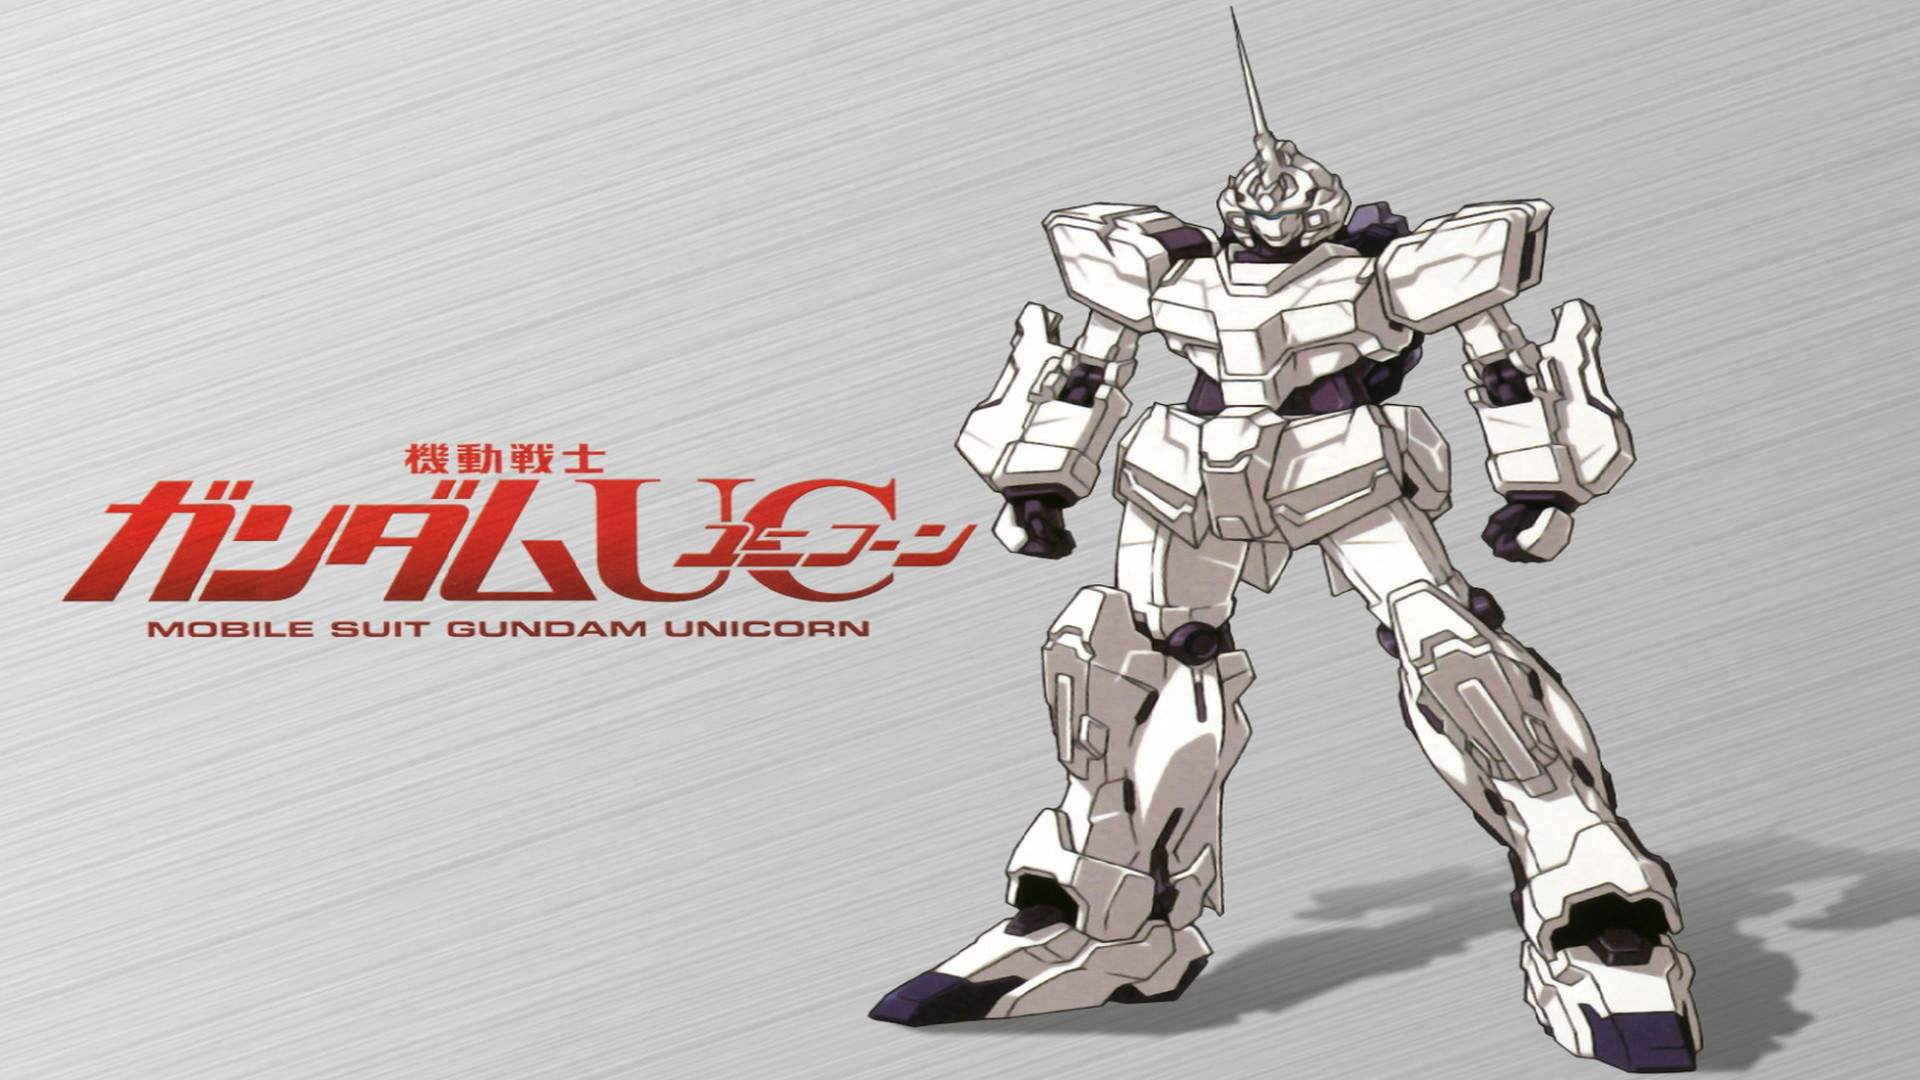 1920x1080 Gundam Unicorn Wallpapers 11, Wallpapers, HD Anime Wallpapers, Desktop .